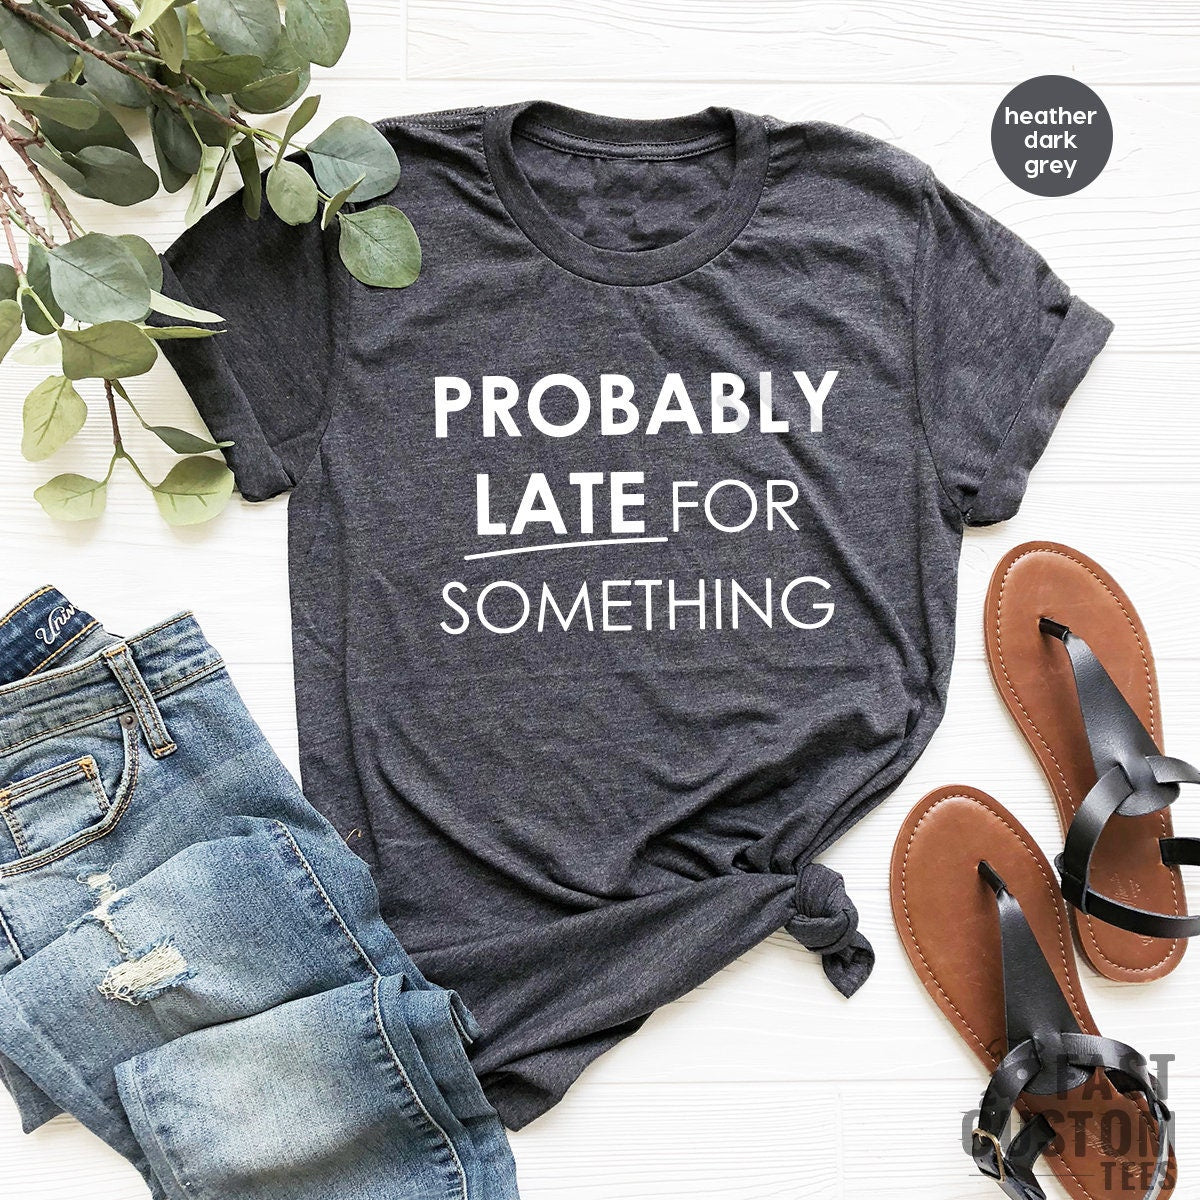 Funny Saying TShirt, Funny Mom Shirt, Workout Shirt, Sassy Shirts, New Baby T Shirt, Probably Late For Something, Procrastination Shirts - Fastdeliverytees.com